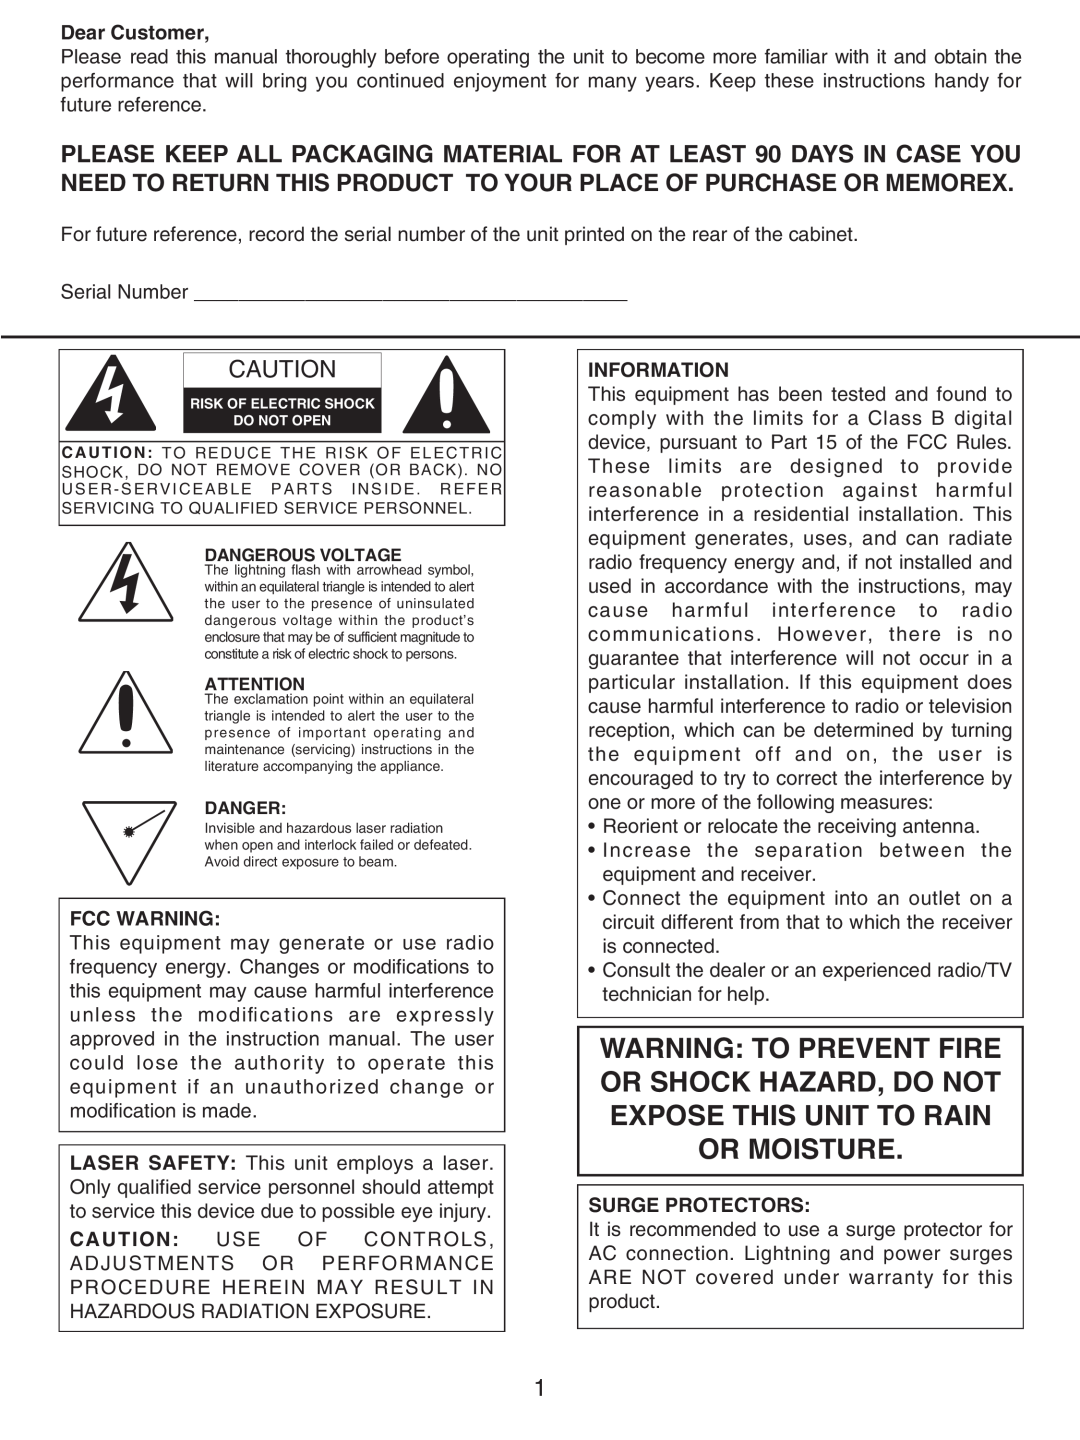 Memorex MX4107 manual Fcc Warning, Information, Surge Protectors 